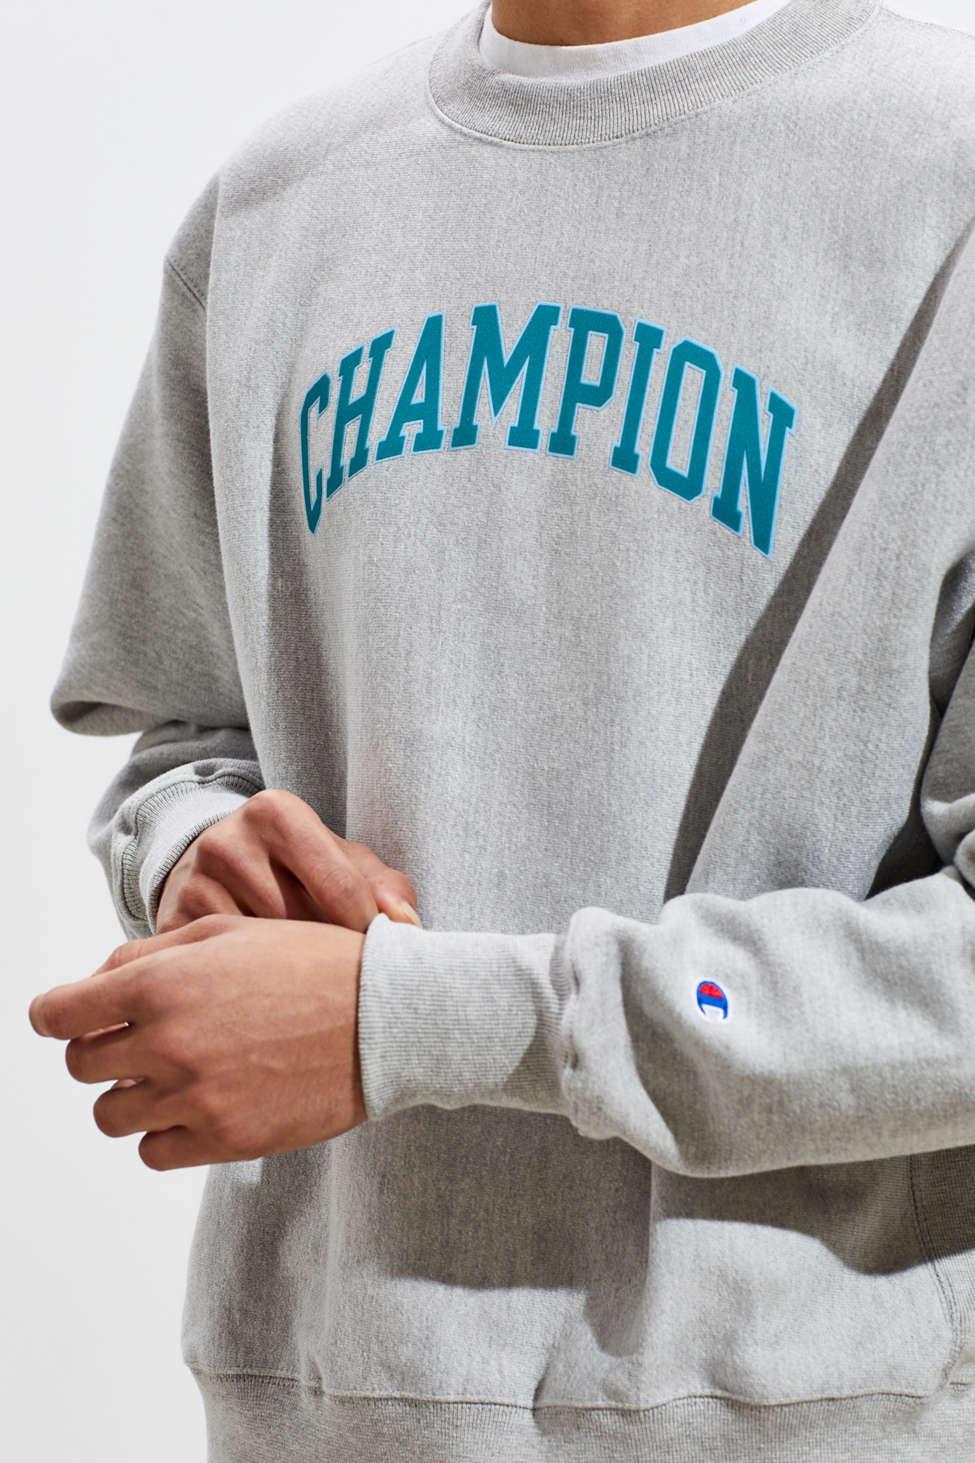 Champion Cotton Champion Uo Exclusive Collegiate Script Crew Neck Sweatshirt  in Gray for Men - Lyst